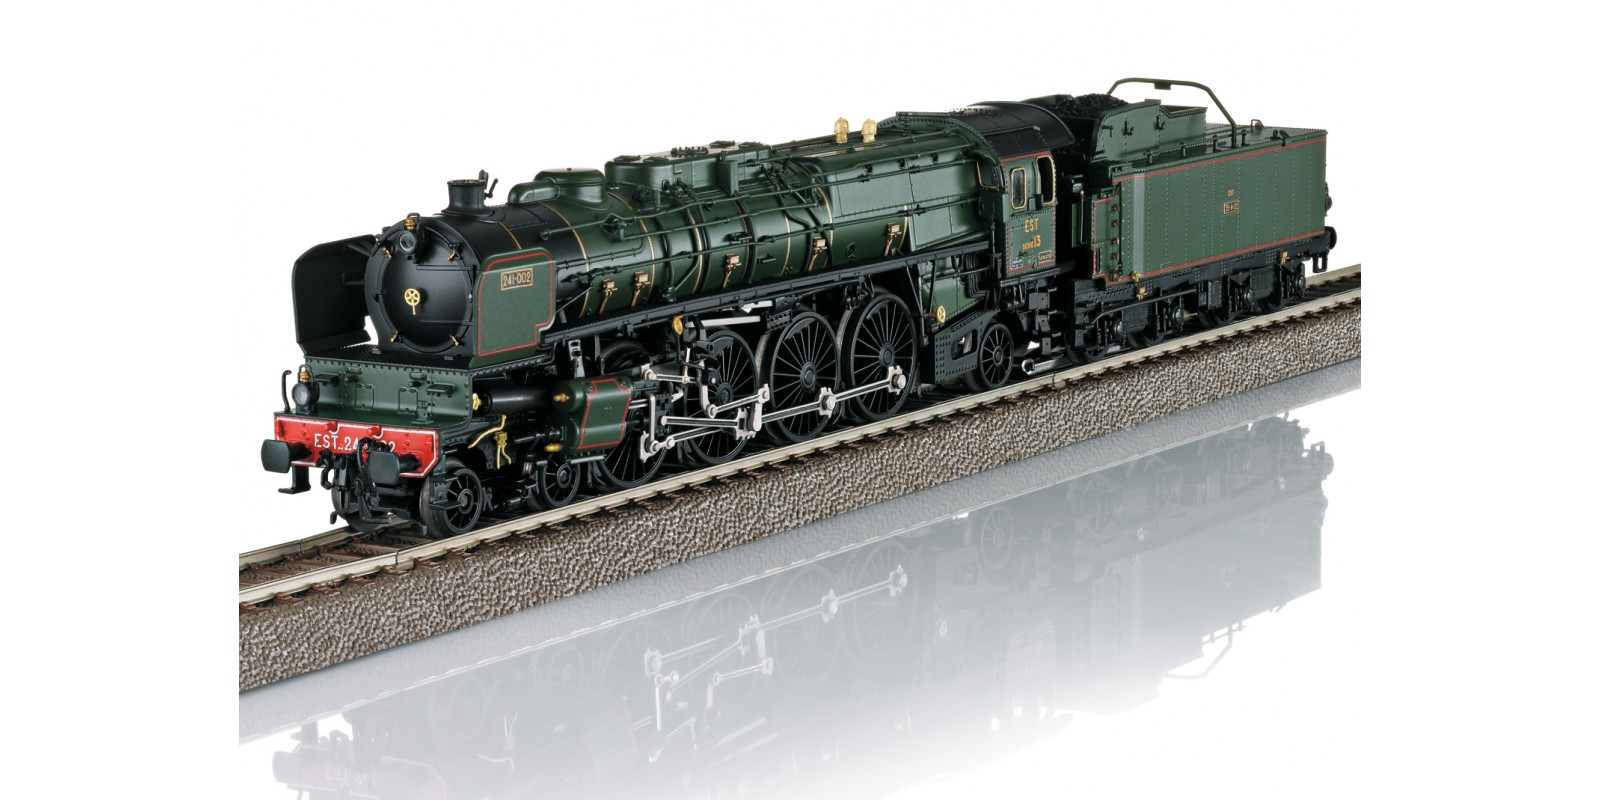 T22913 EST Class 13 Express Train Steam Locomotive